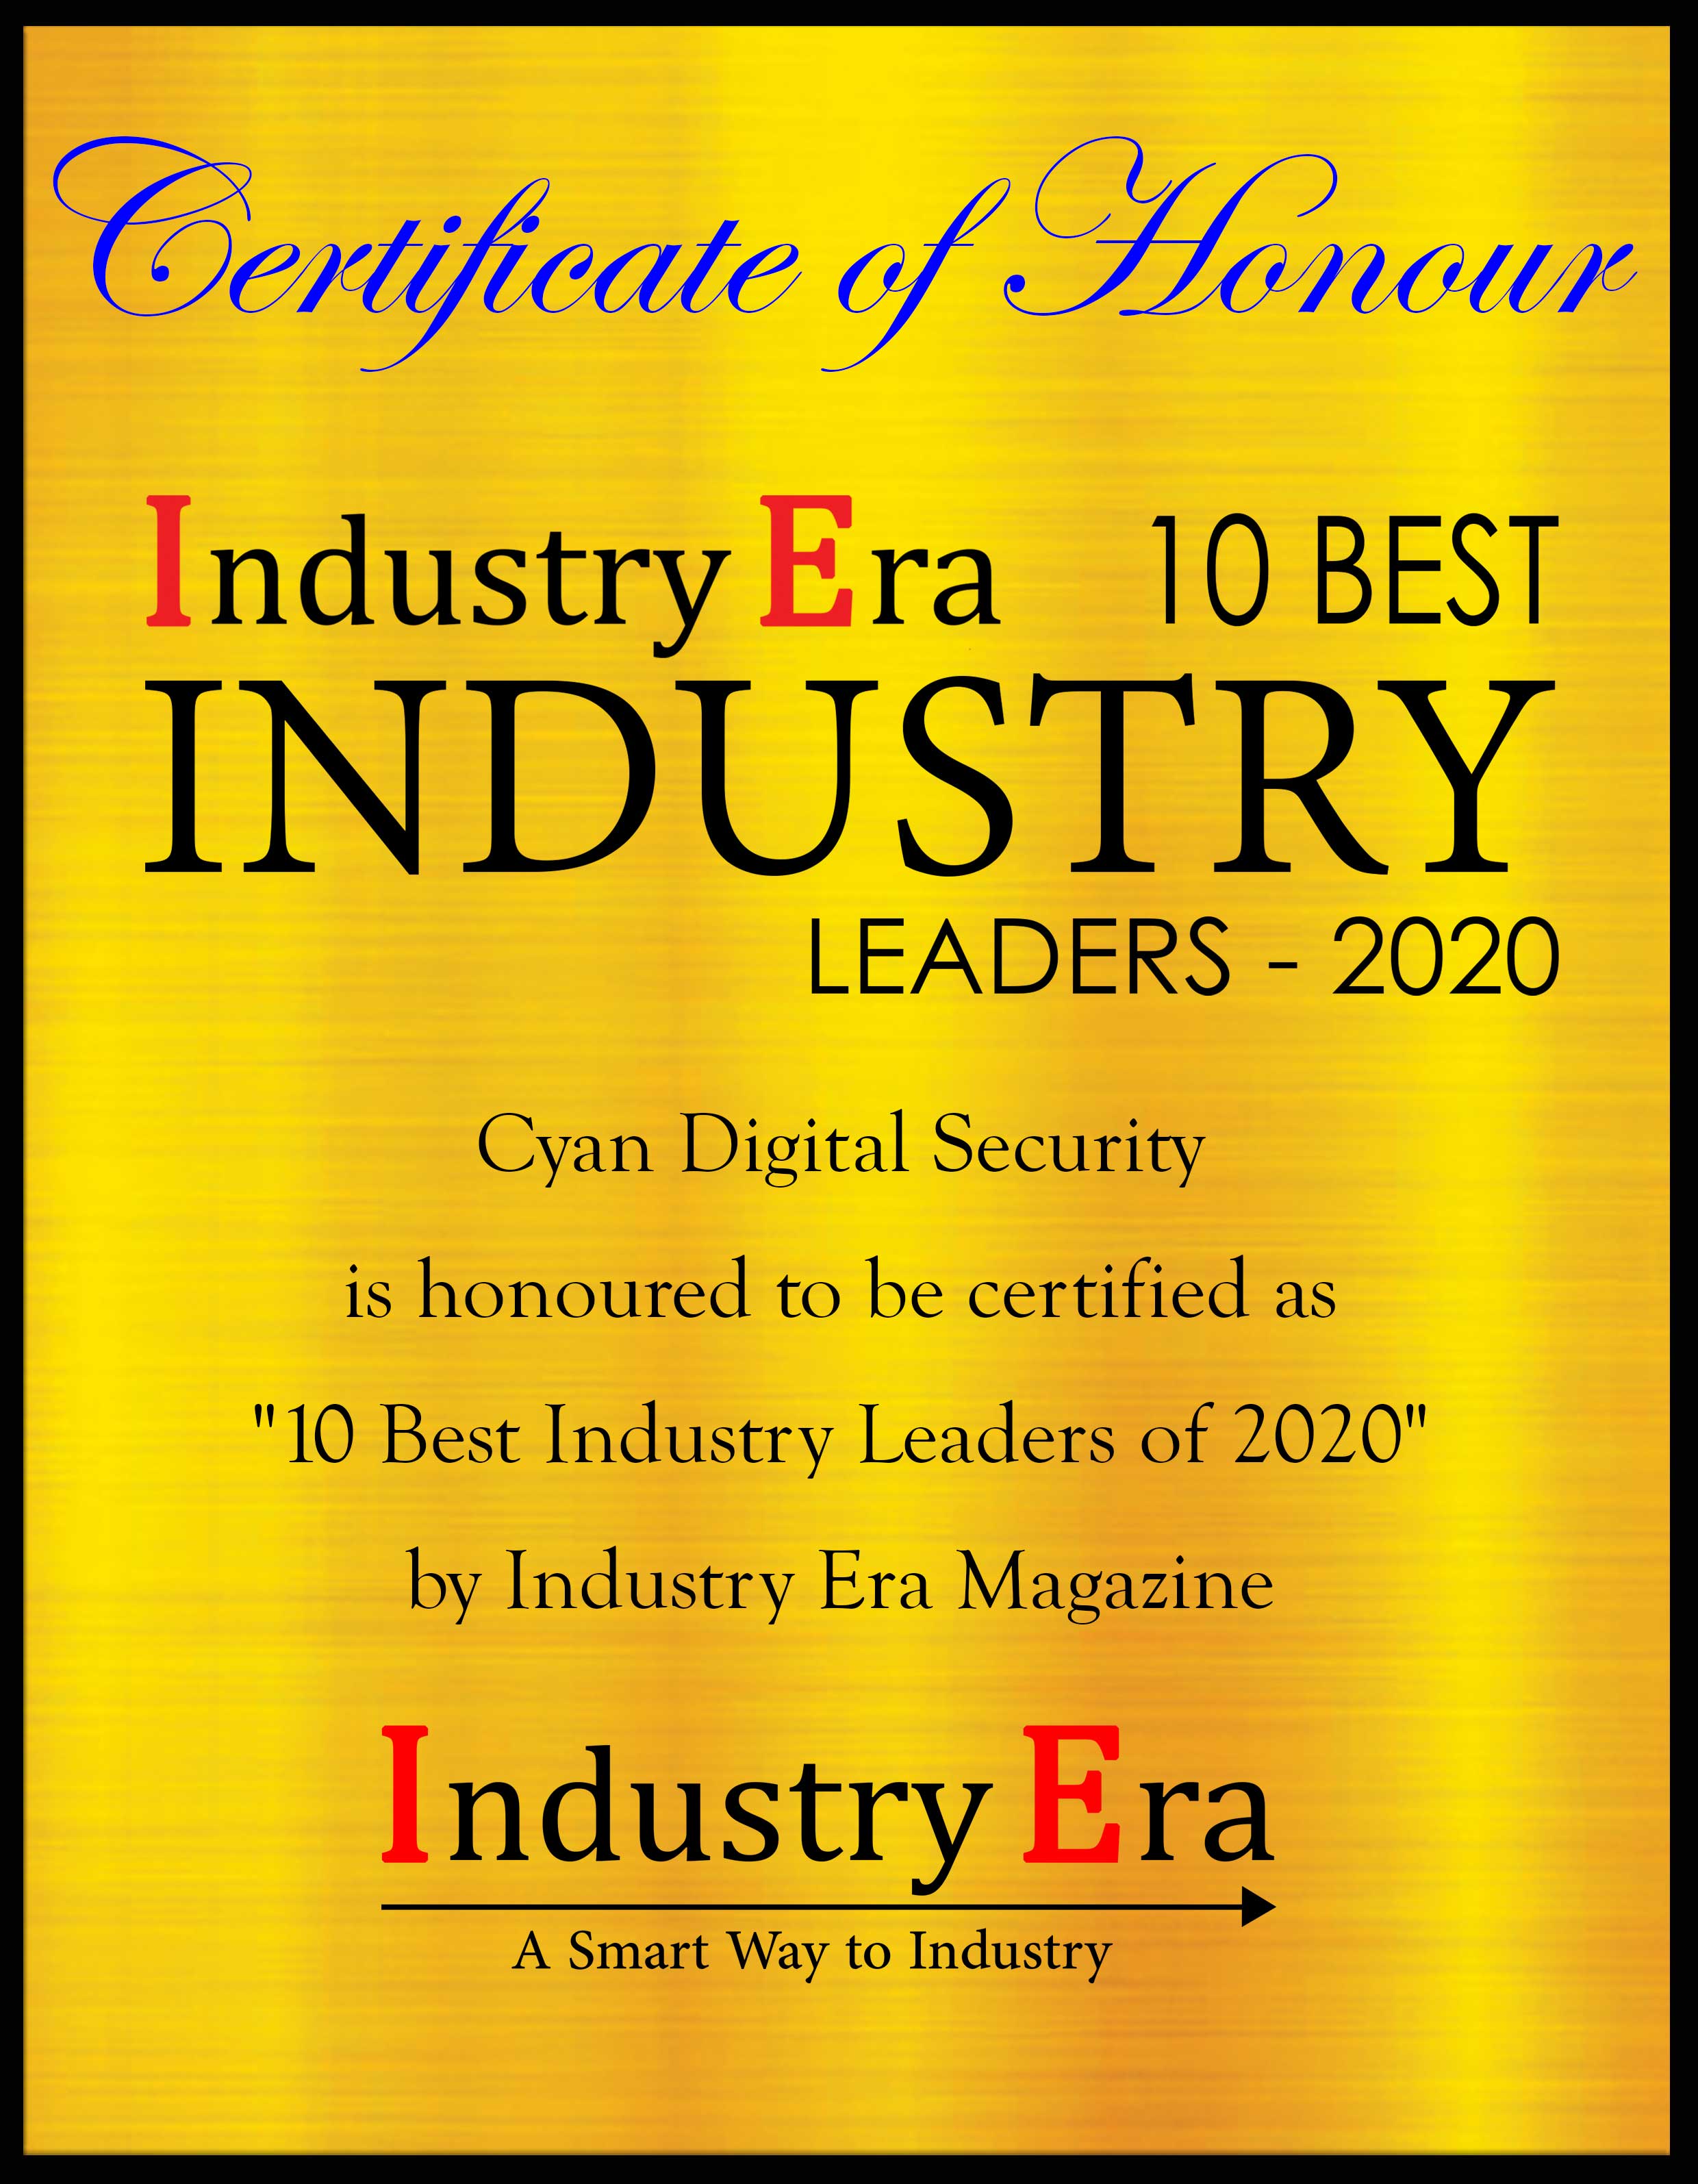 Frank von Seth, CEO of Cyan Digital Security Certificate